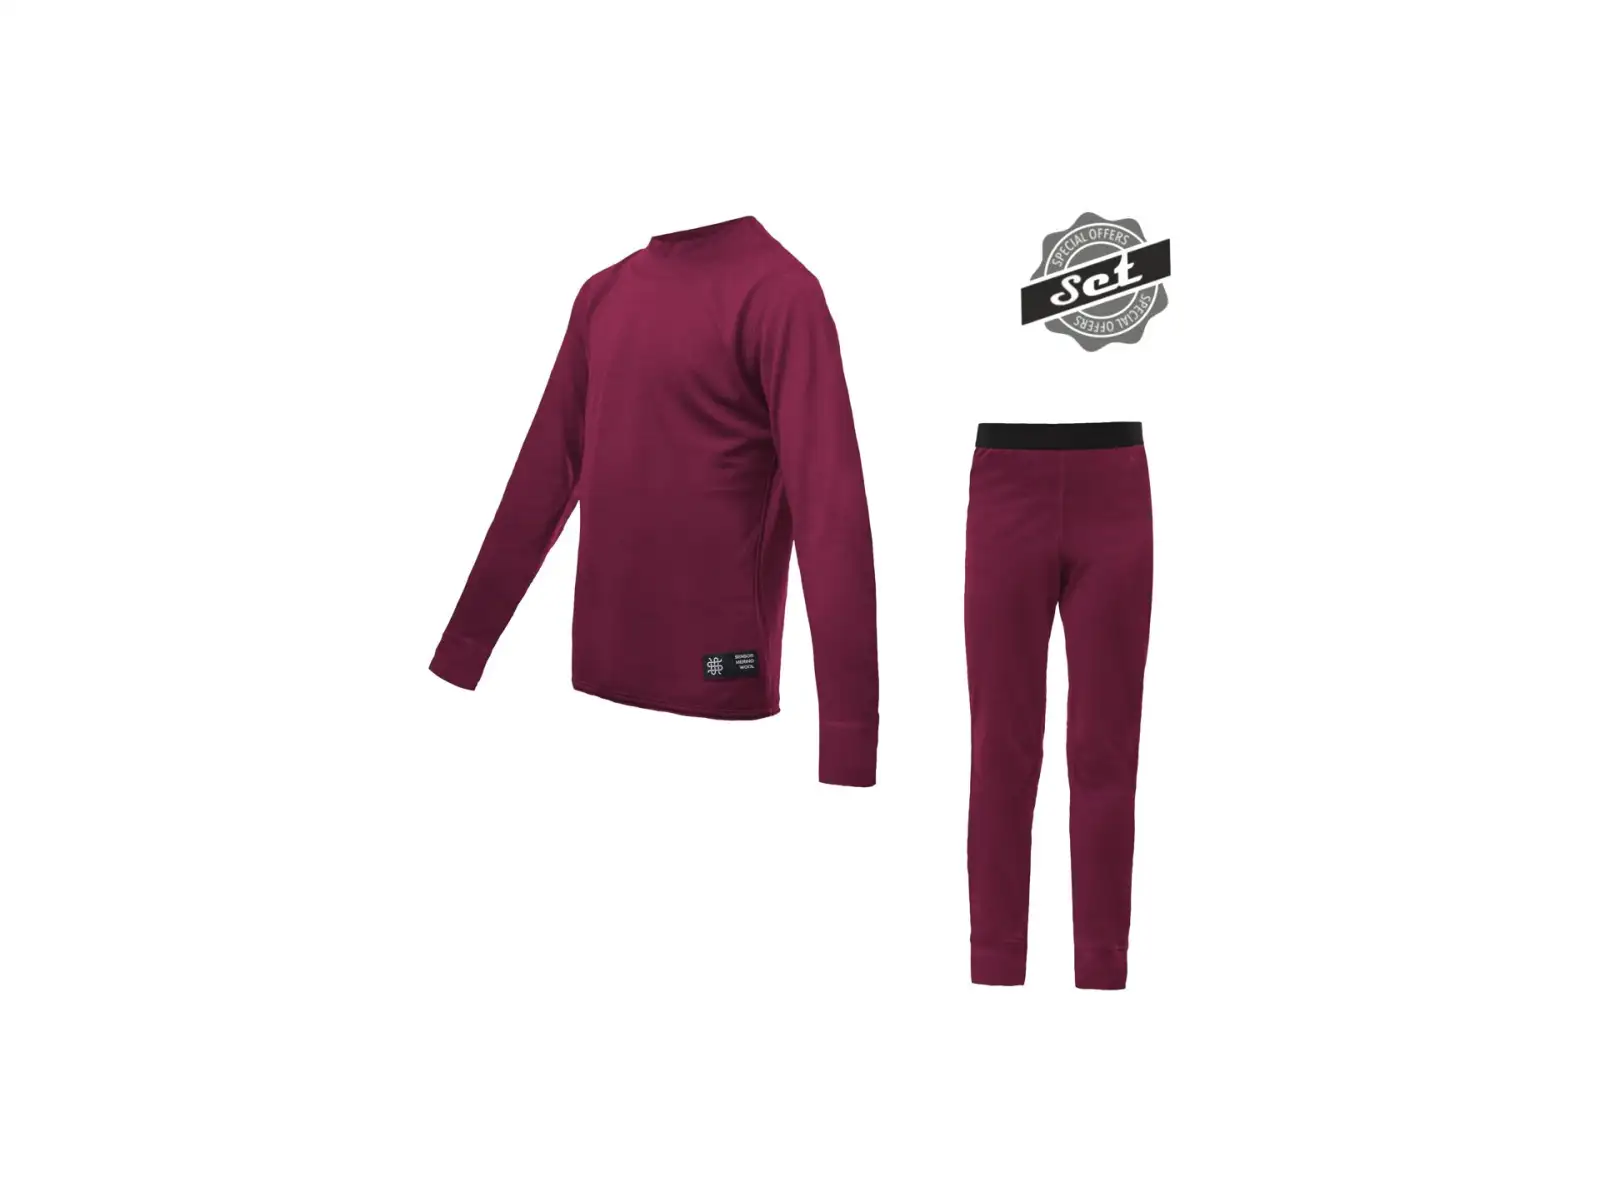 Sensor Merino Active set juniorské triko dlouhý rukáv + kalhoty lilla